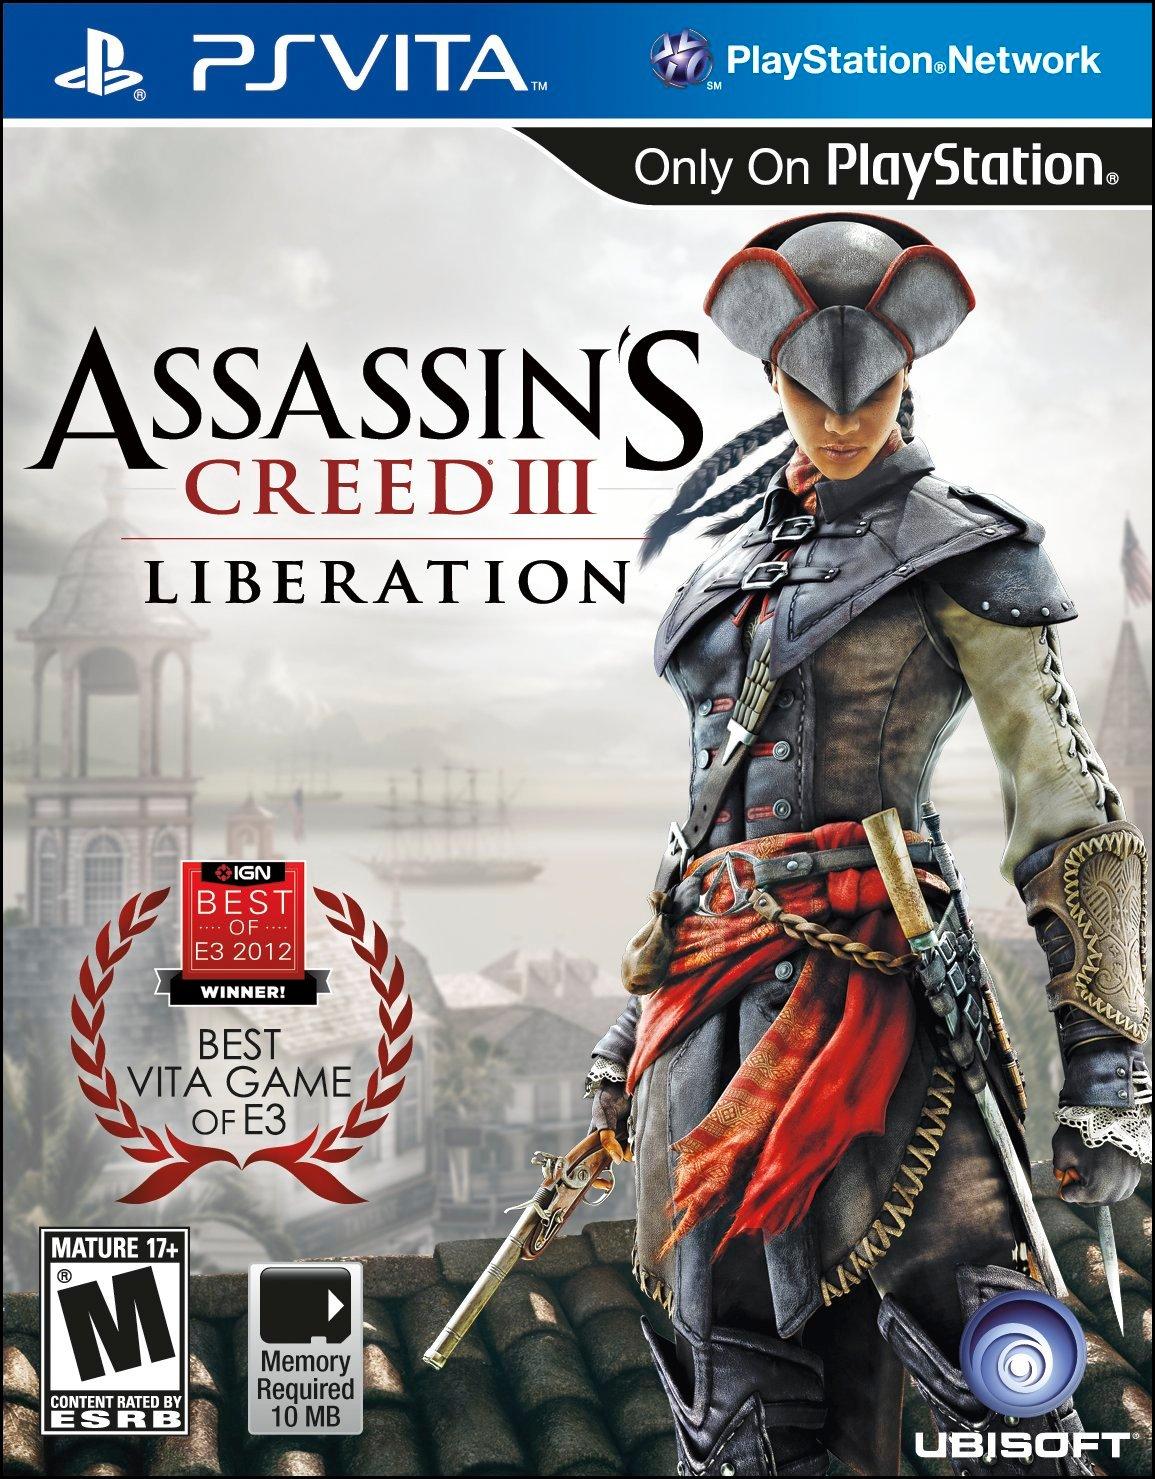 assassin's creed liberation xbox 360